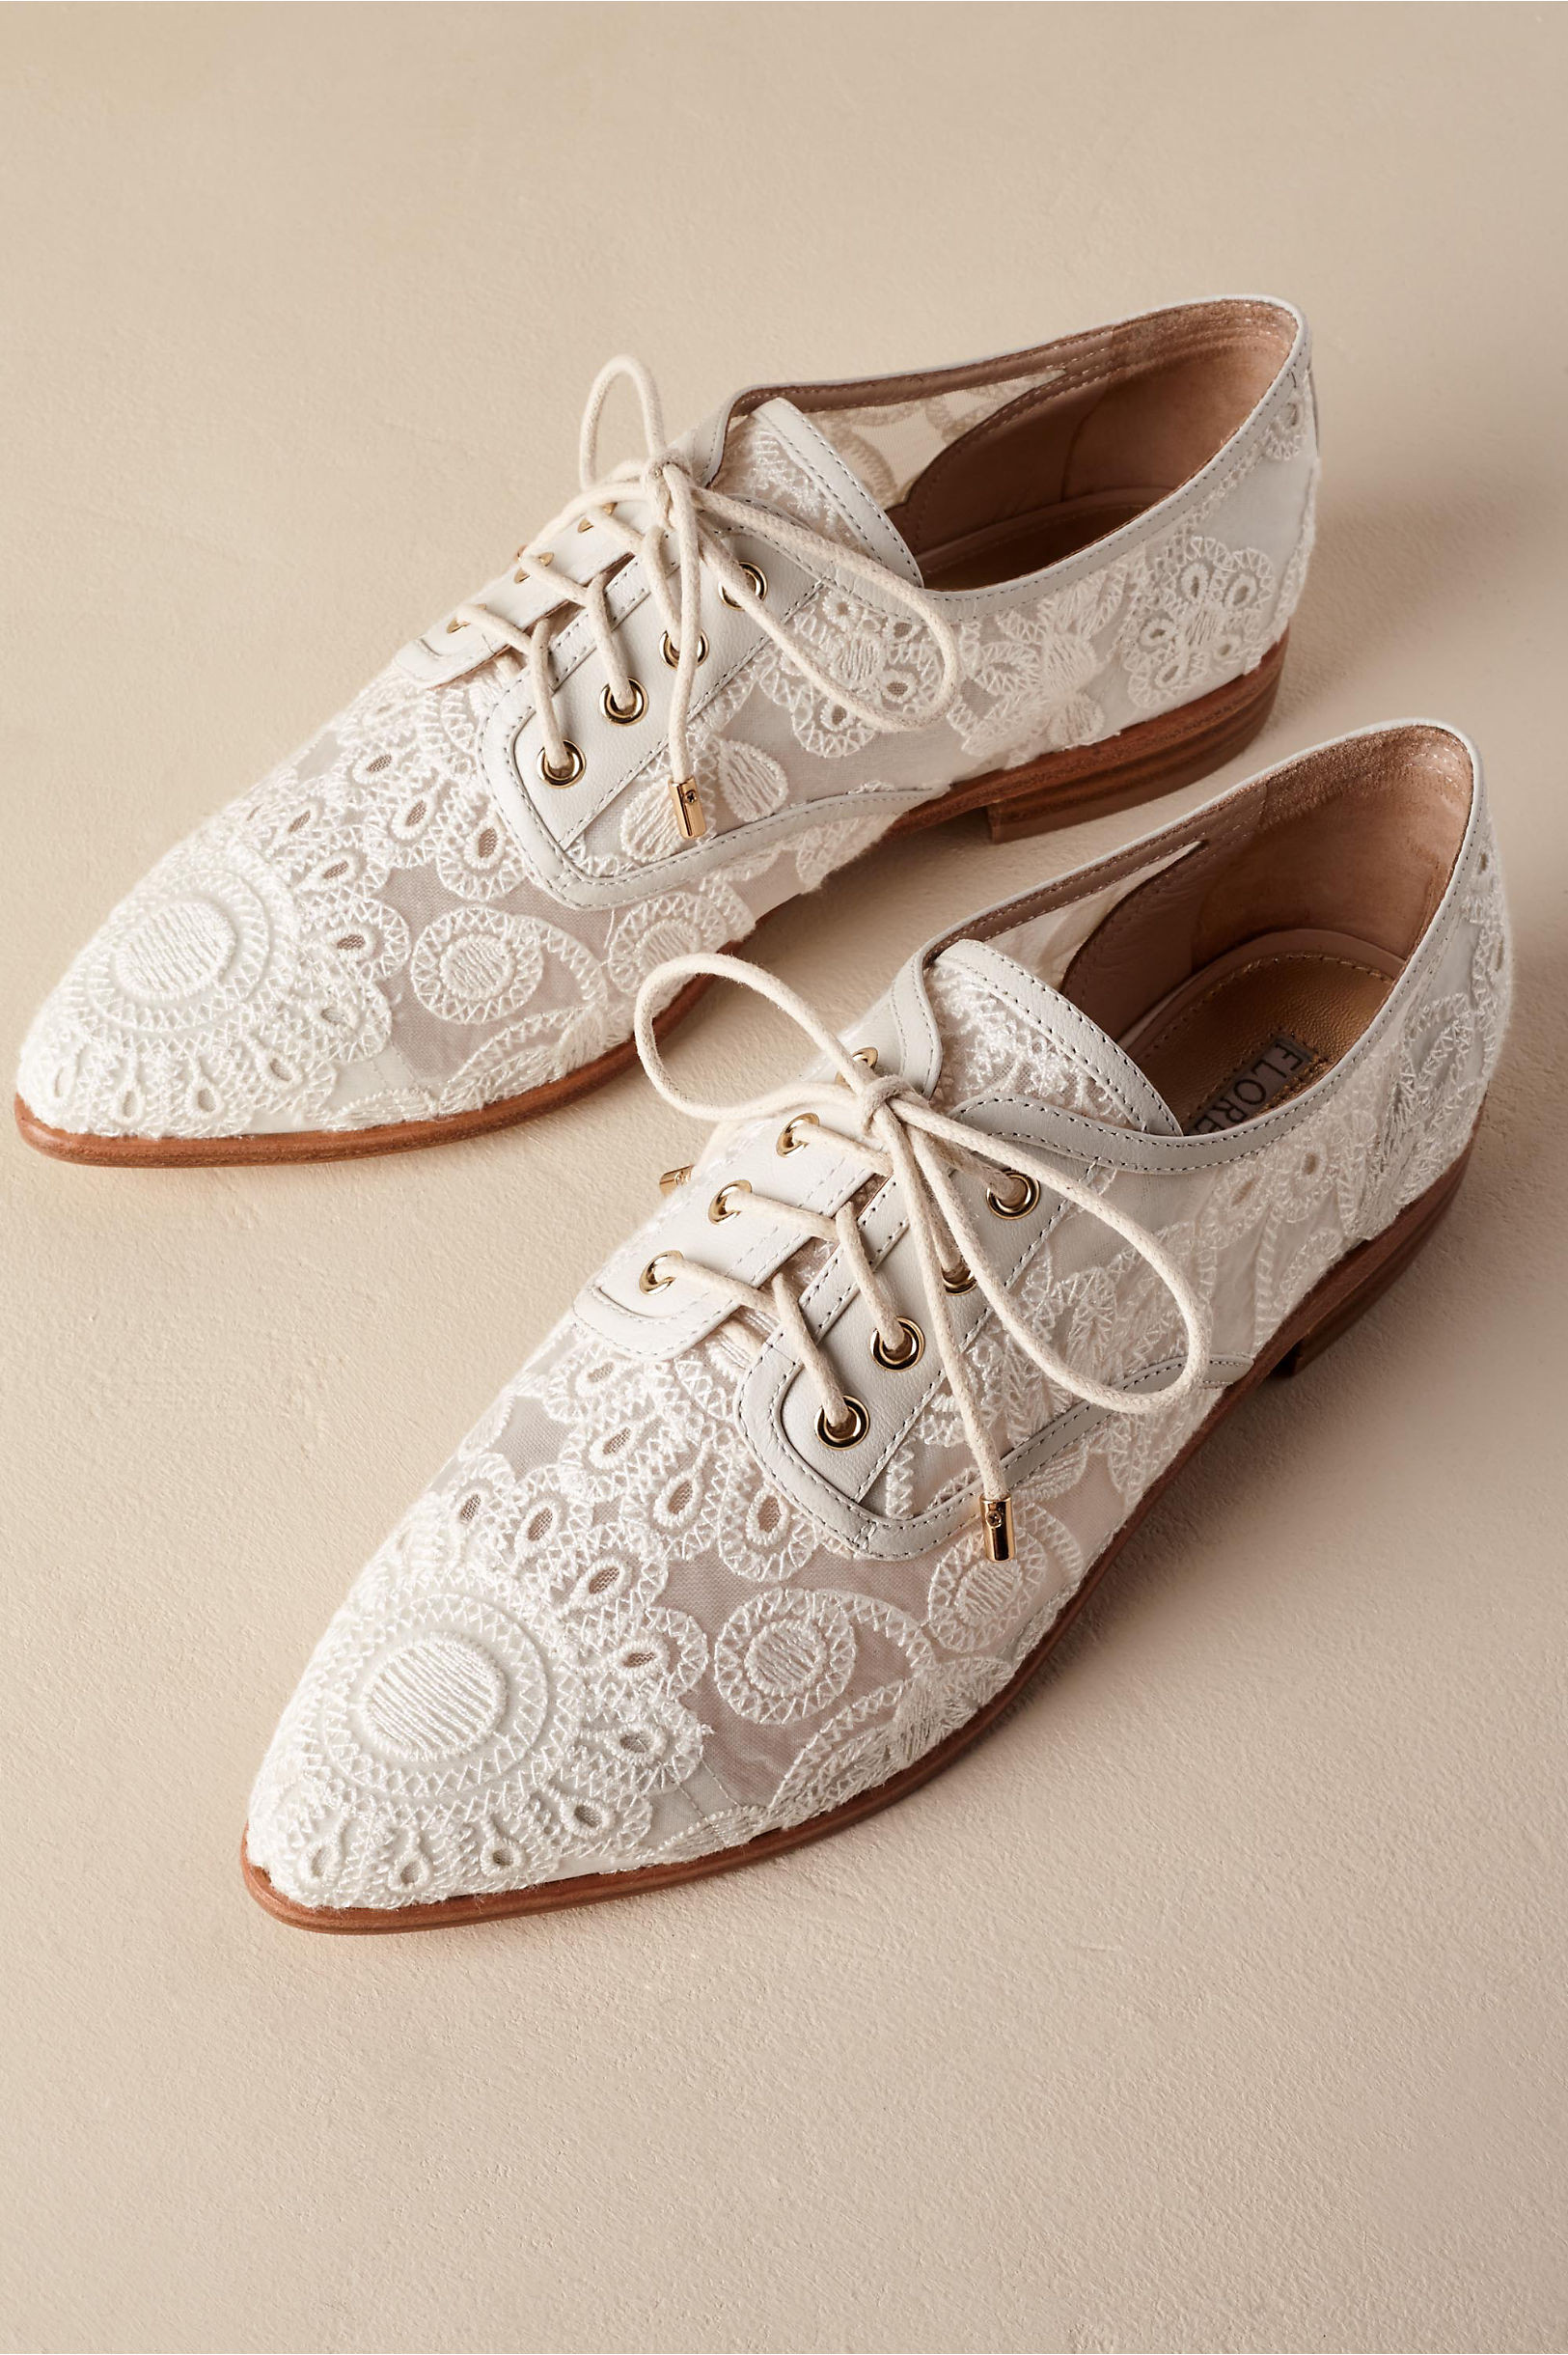 Retro Wedding Shoes
 Vintage Style Wedding Shoes Retro Inspired Shoes